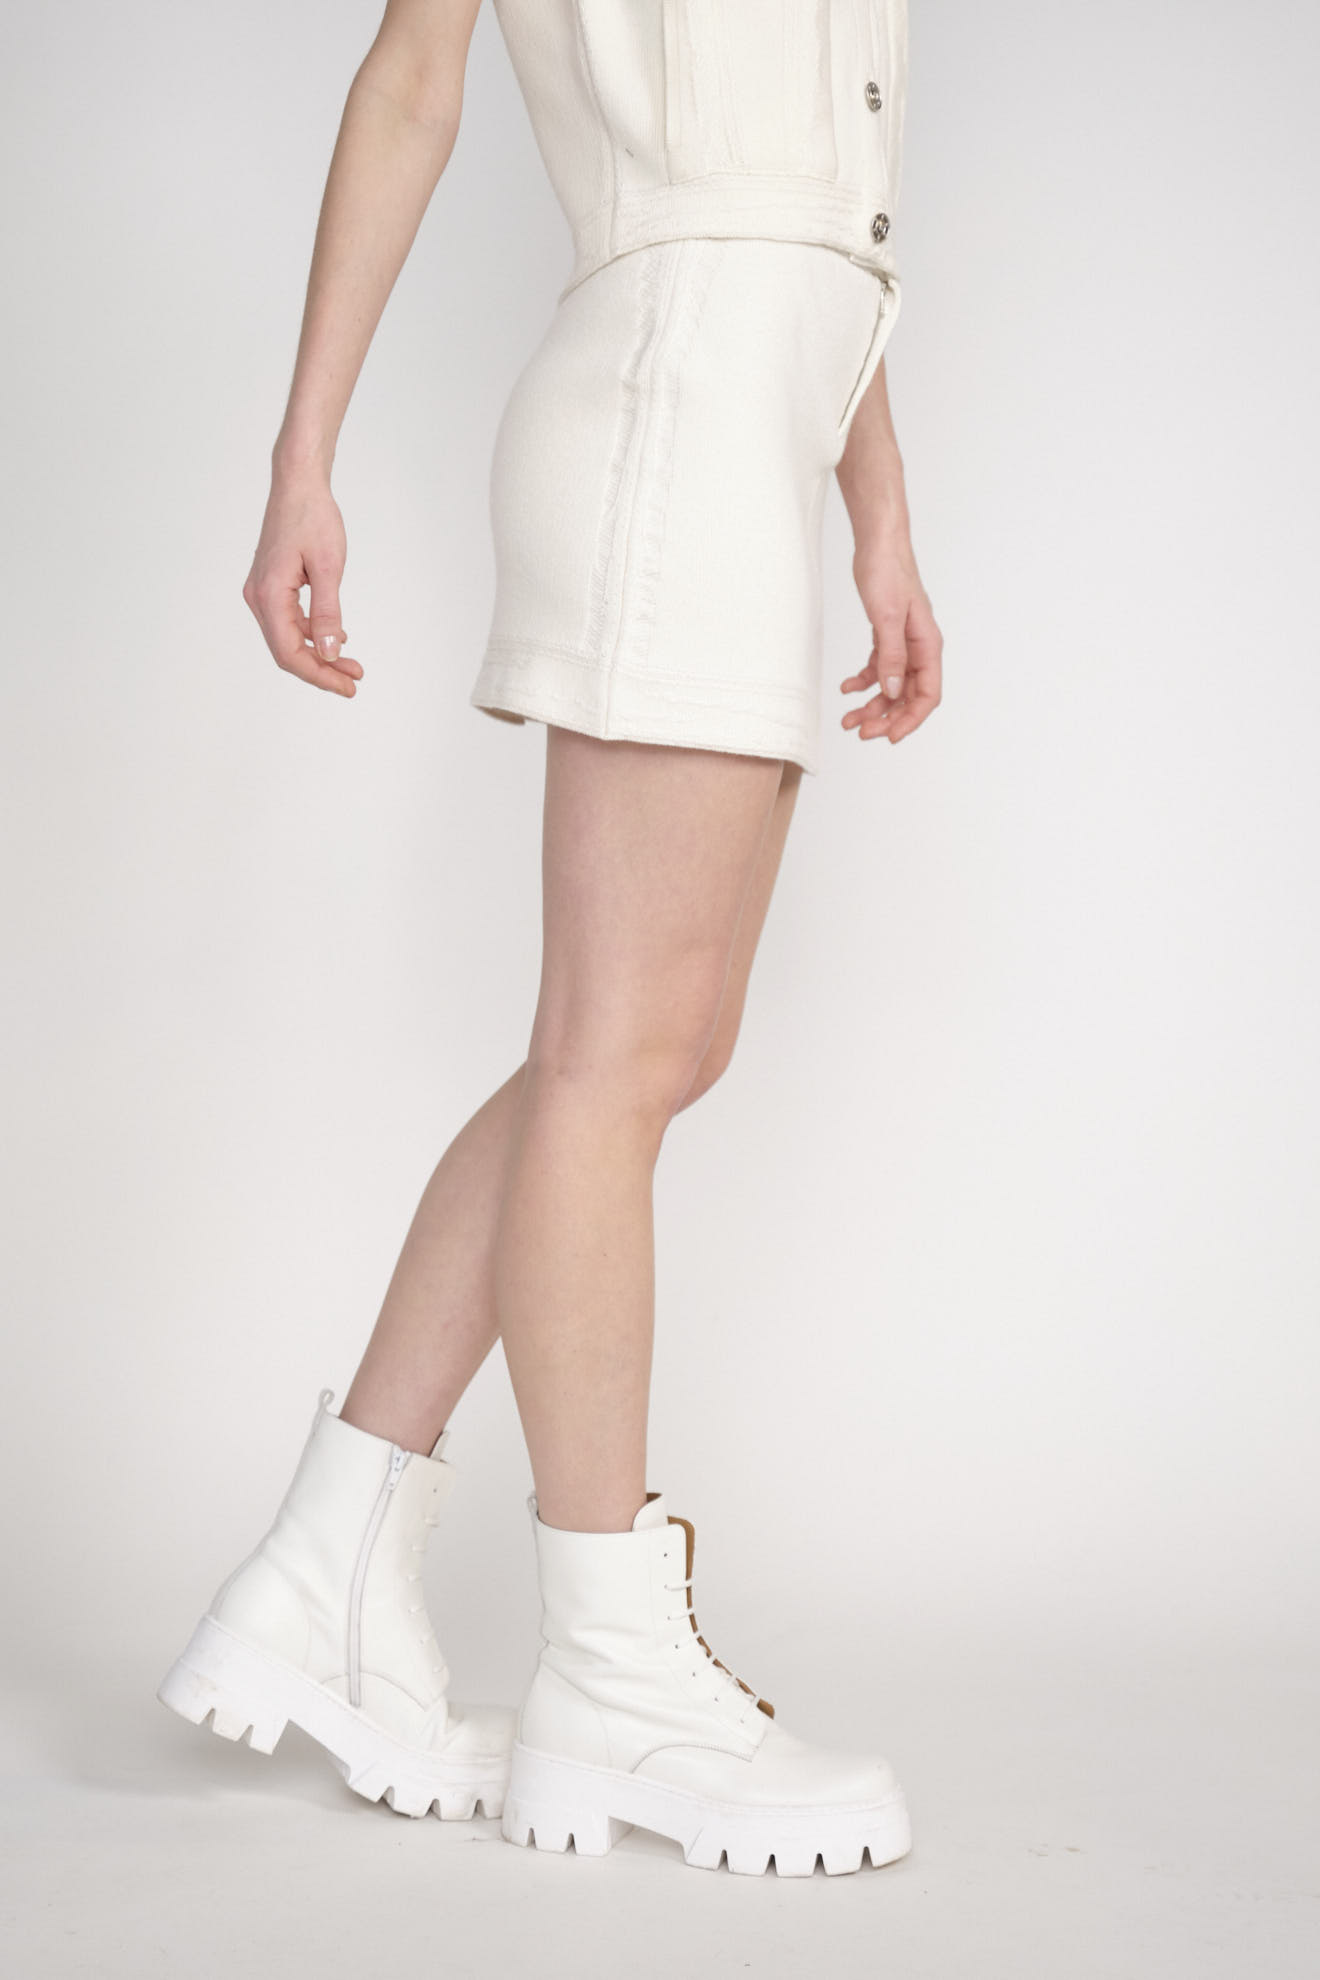 Barrie Denim Cashmere and Cotton Skirt - Minirock aus Cashmere weiss S